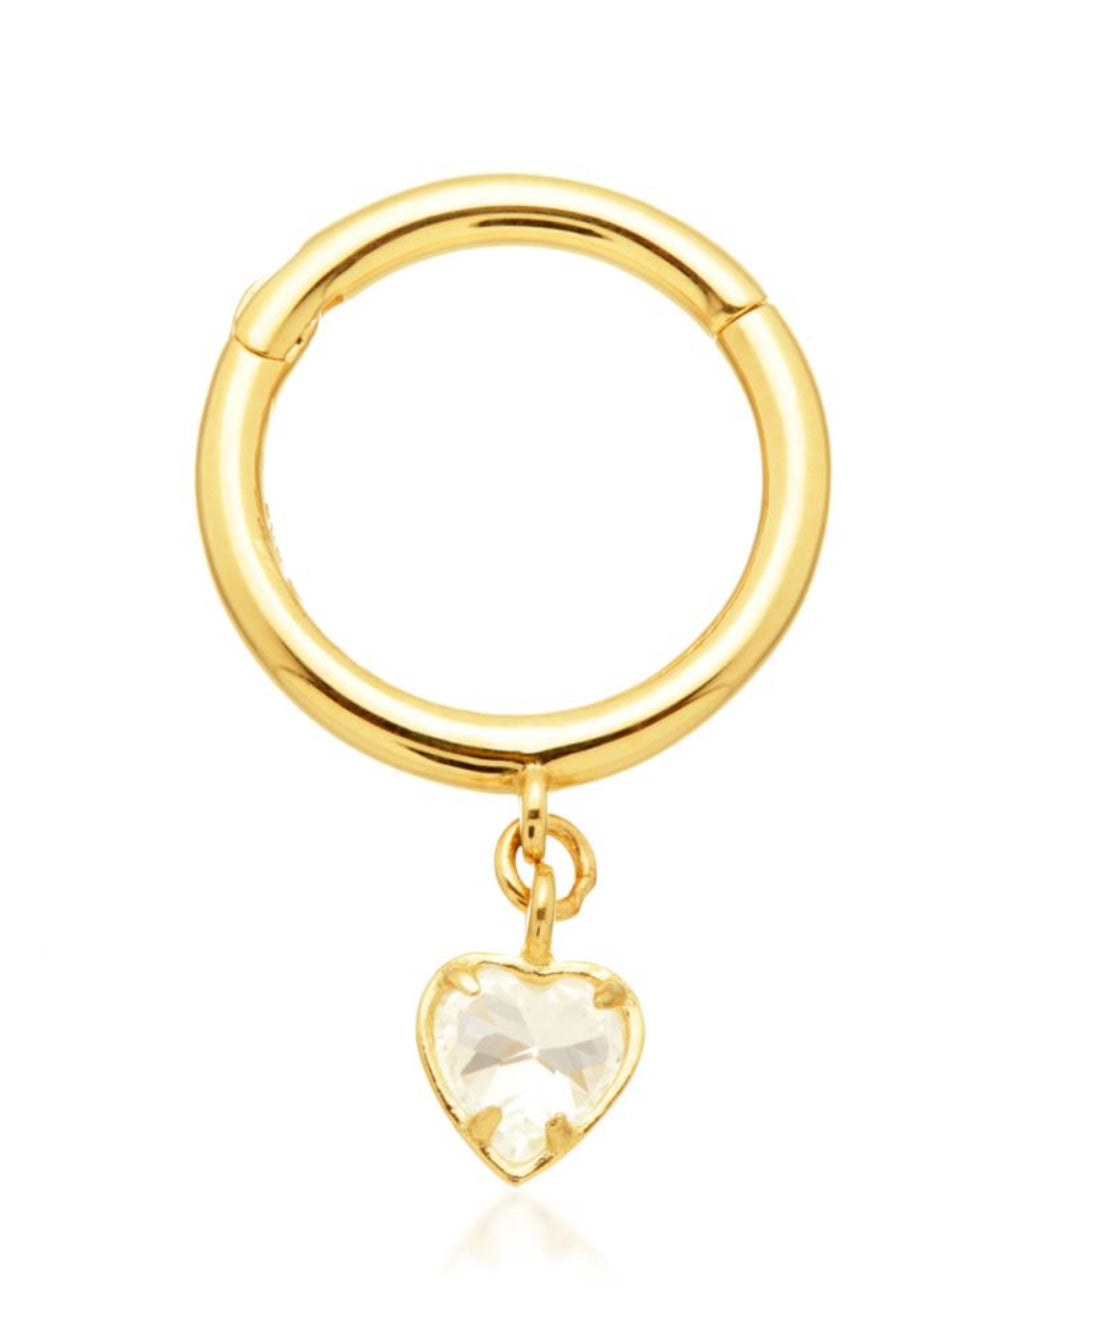 Tish Lyon Gold Heart Charm Chain Hinge Ring